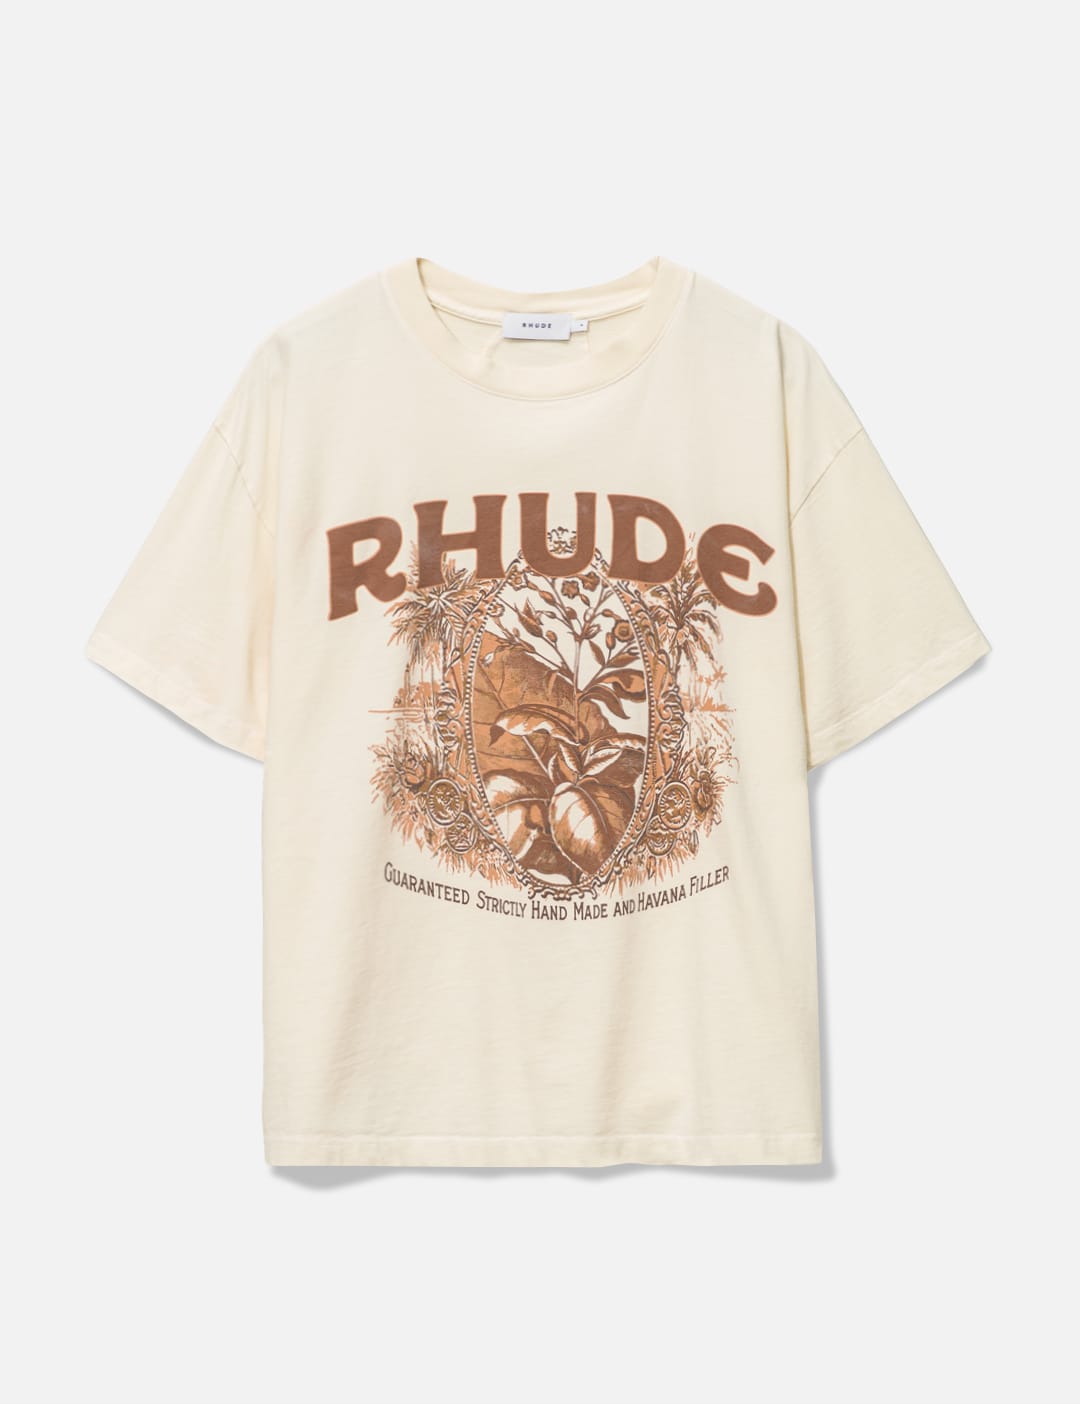 RHUDE Shirt Beige